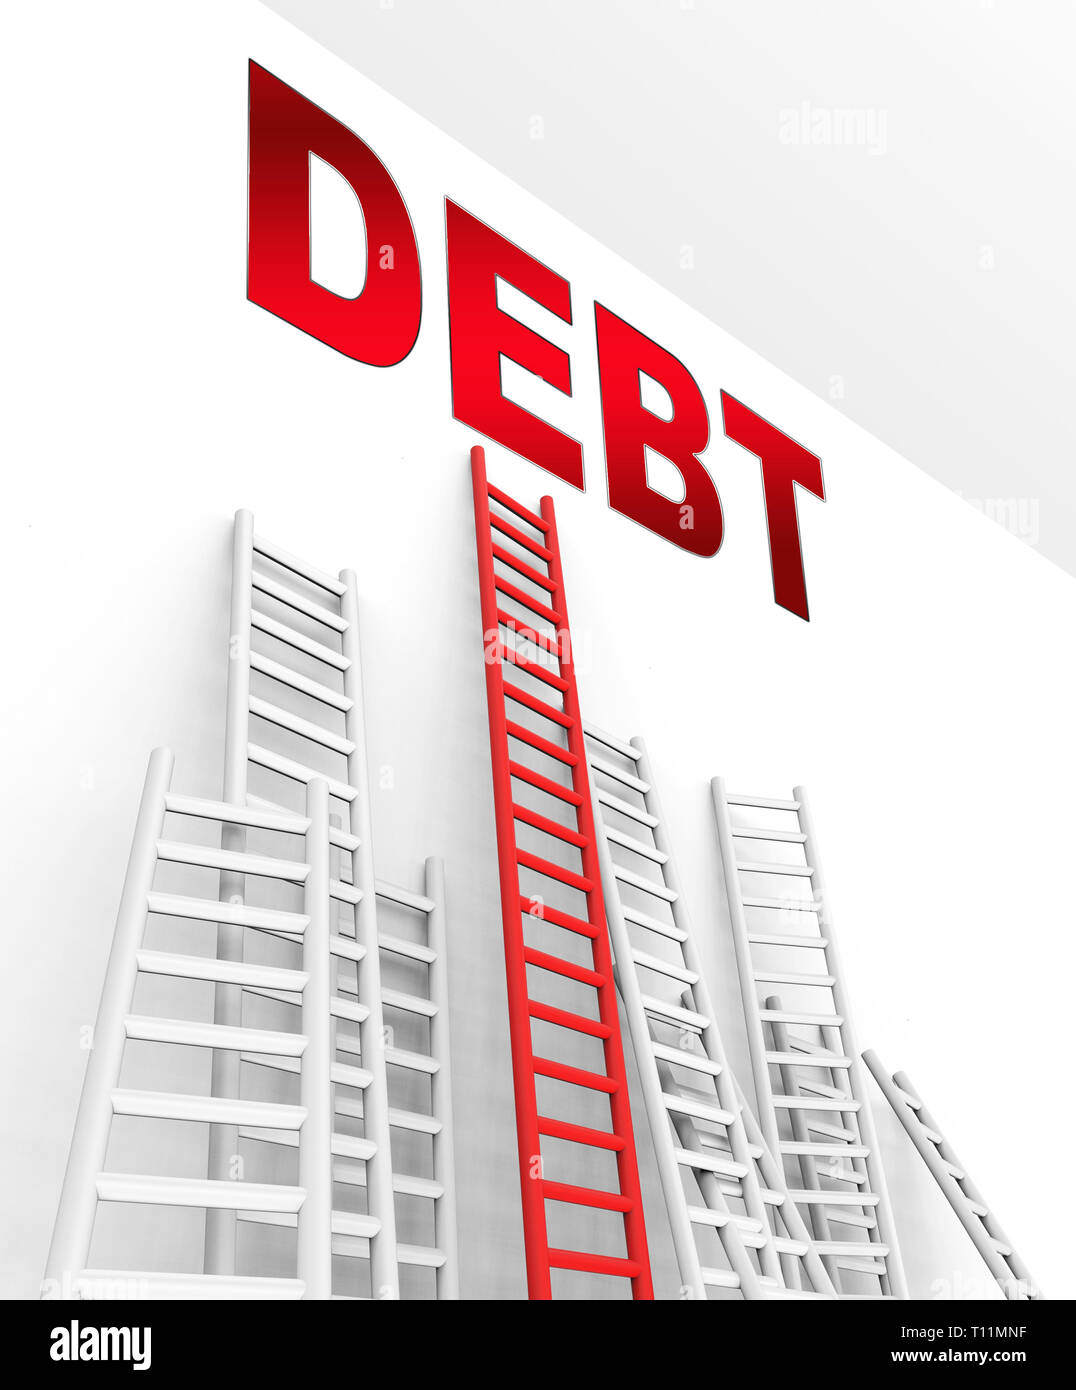 Debt Ceiling Finance Ladders Shows Banking Upper Limit. Federal Or National Money Management - 3d Illustration Stock Photo